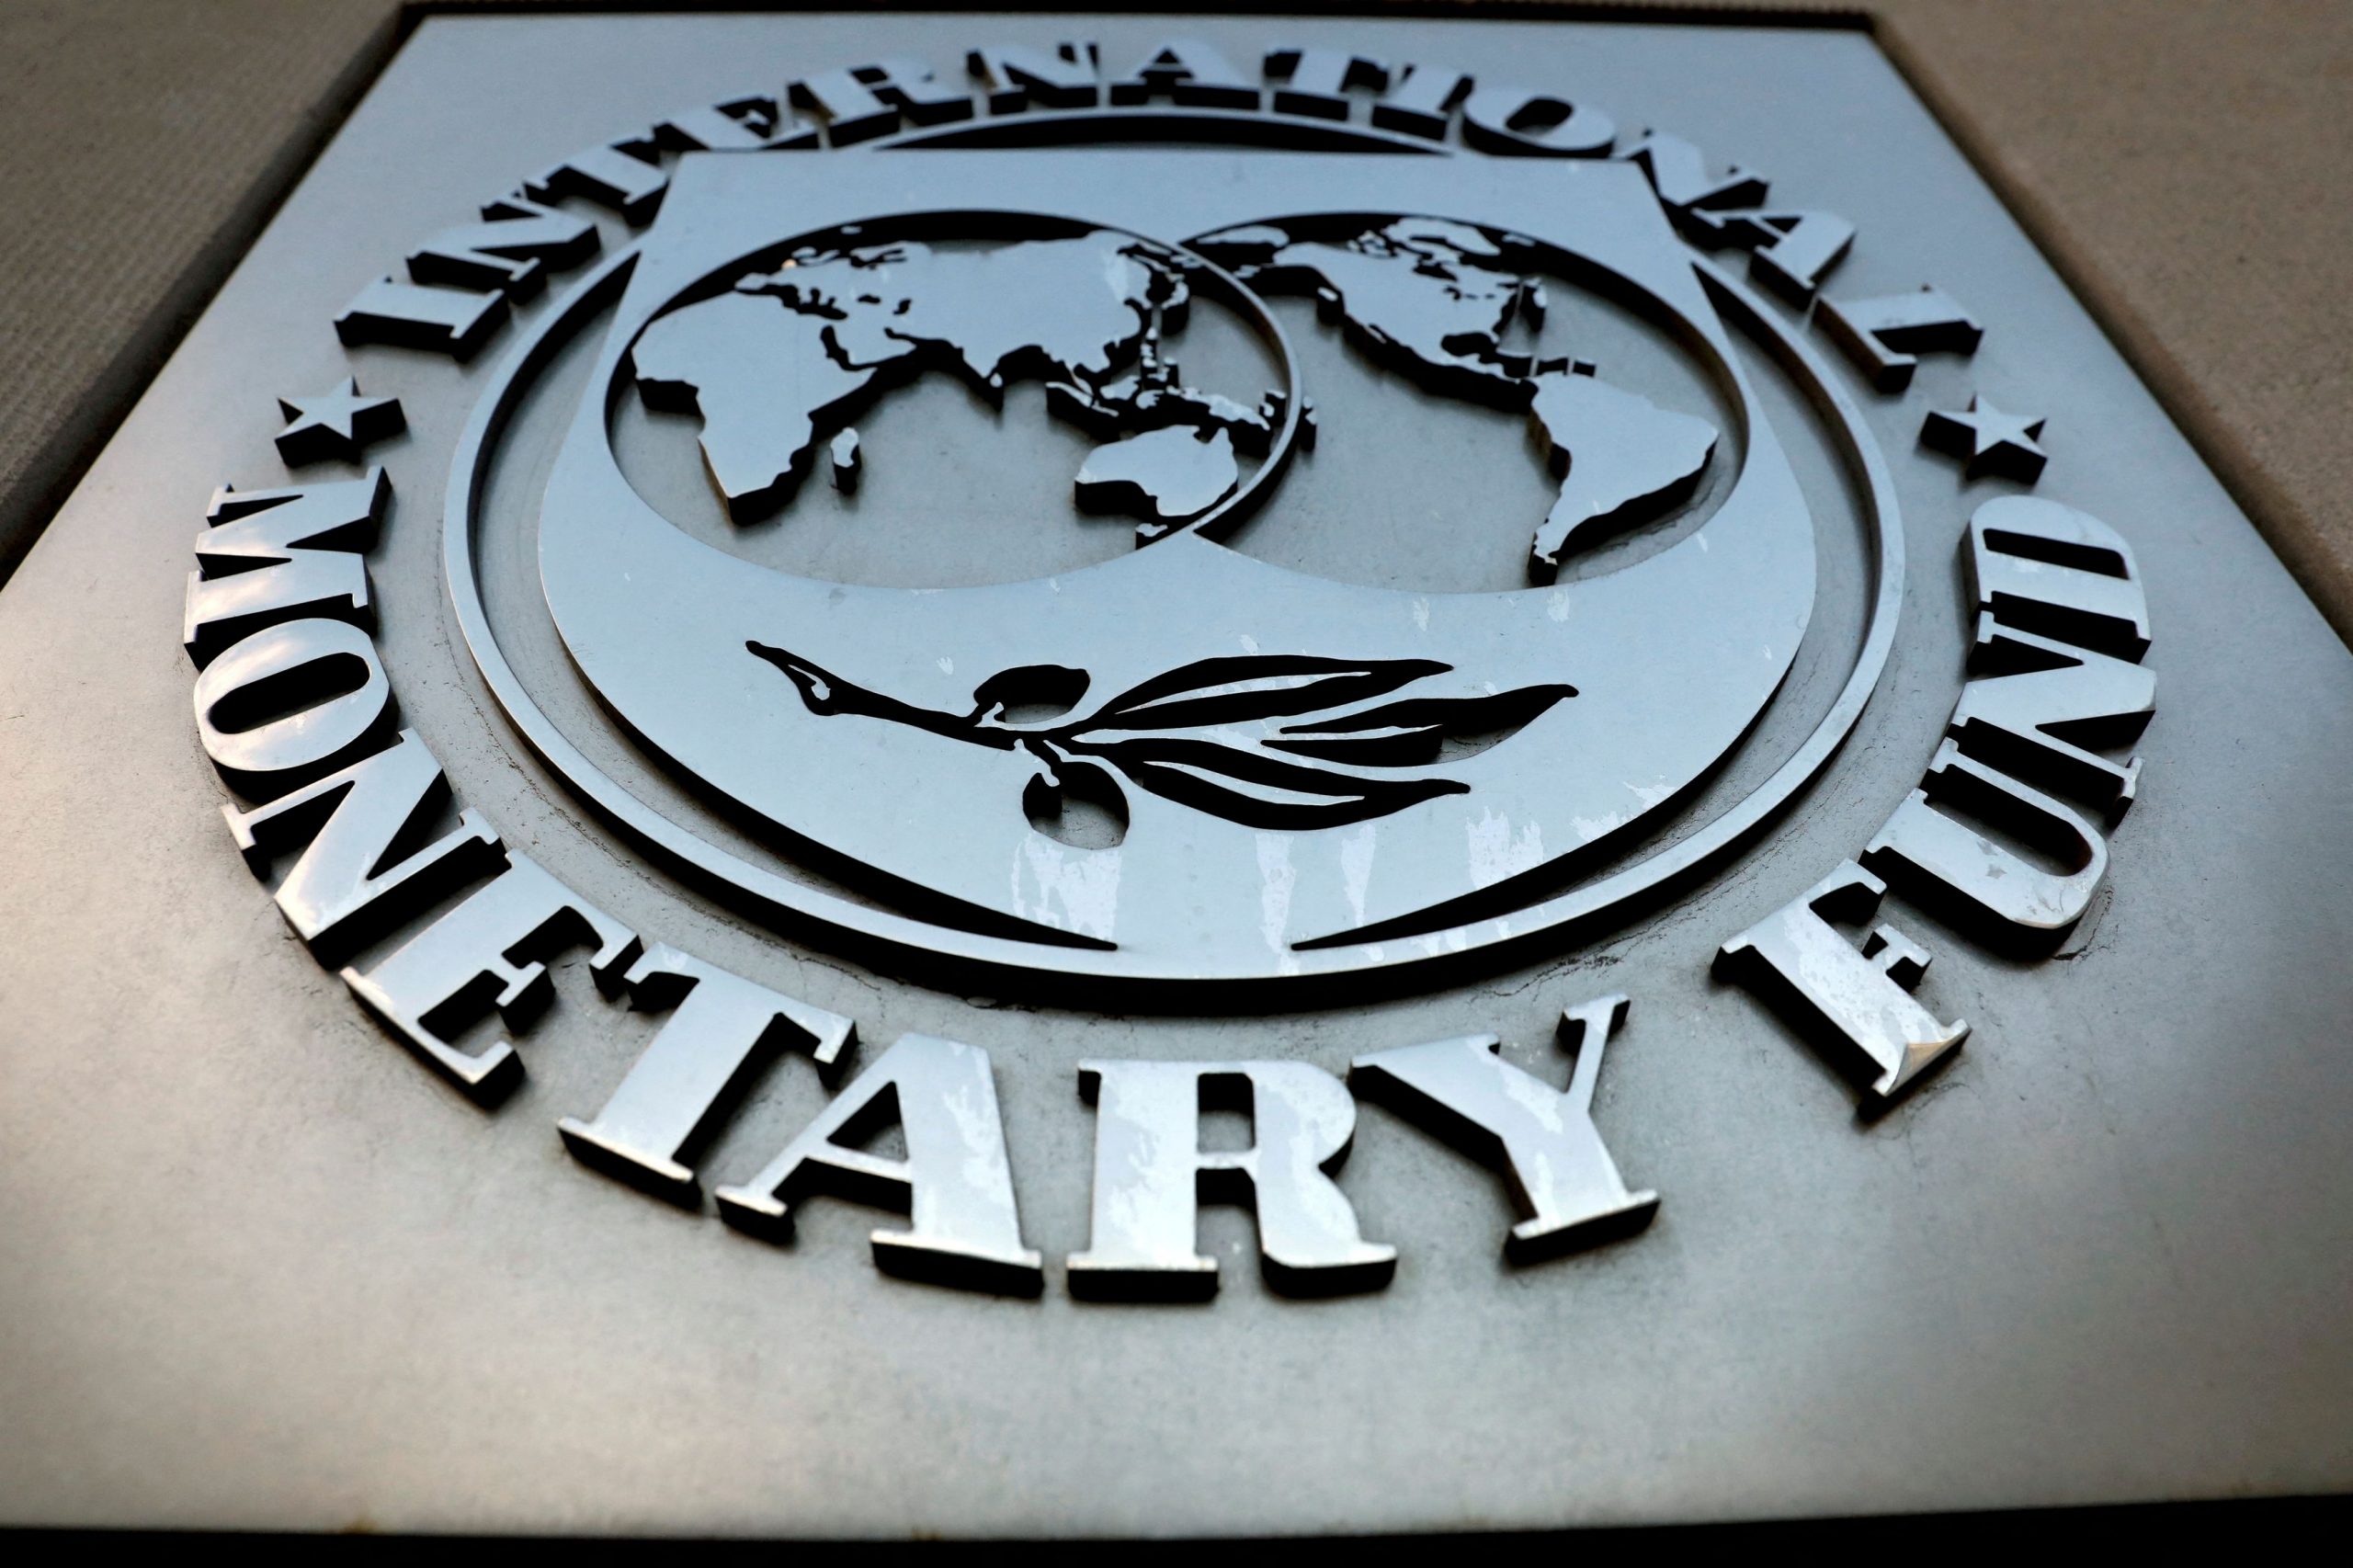 IMF Says Greece’s Informal Sector Shrinking